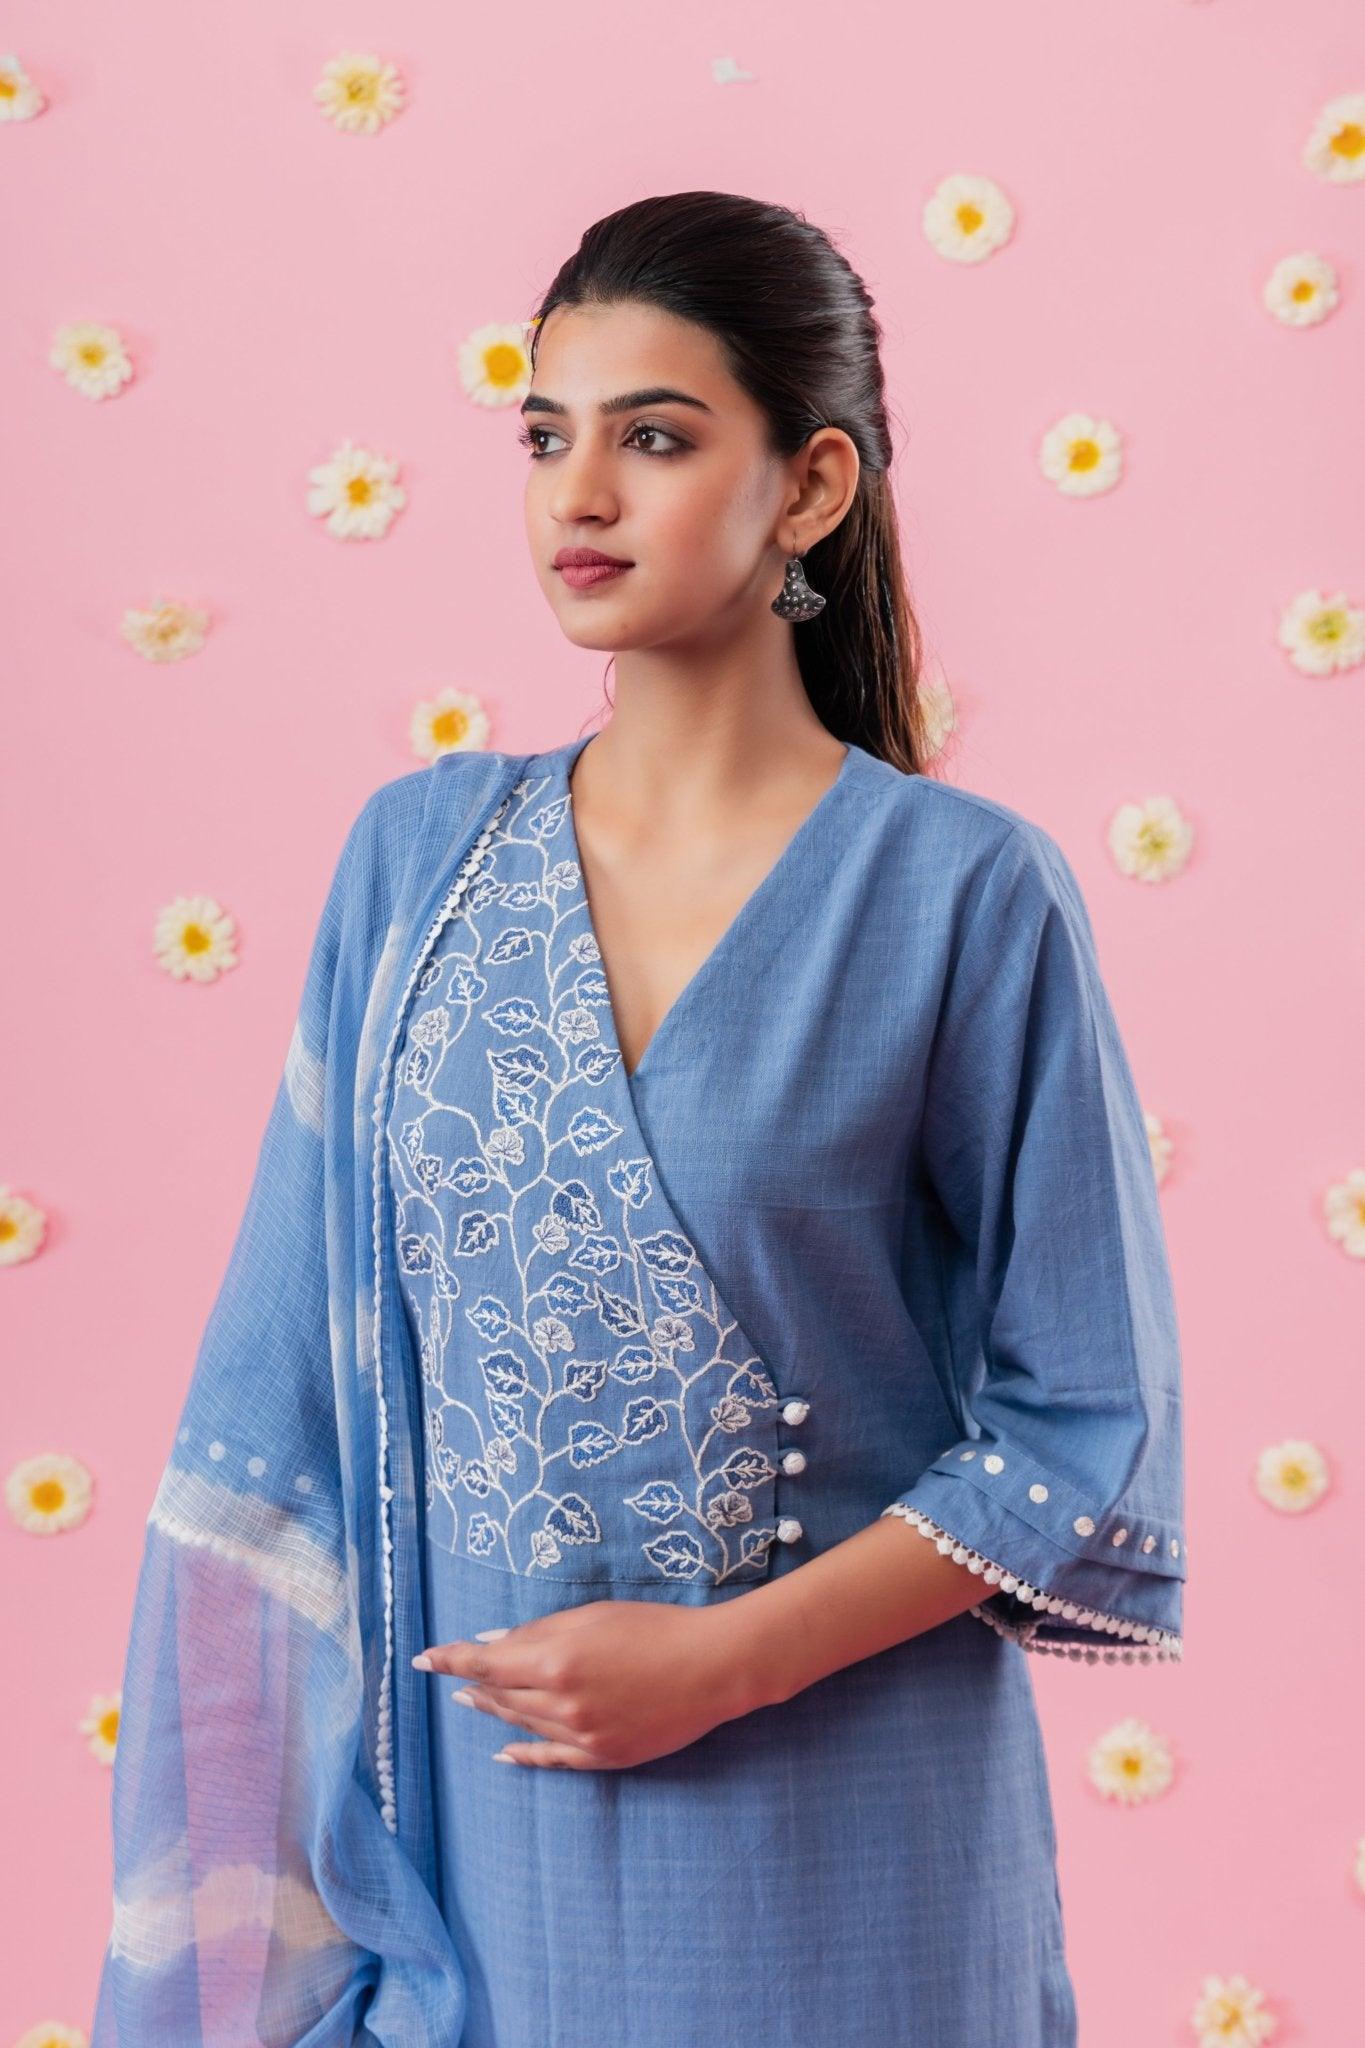 Cornflower blue handloom cotton angrakha kurta with dori embroidery - Sohni